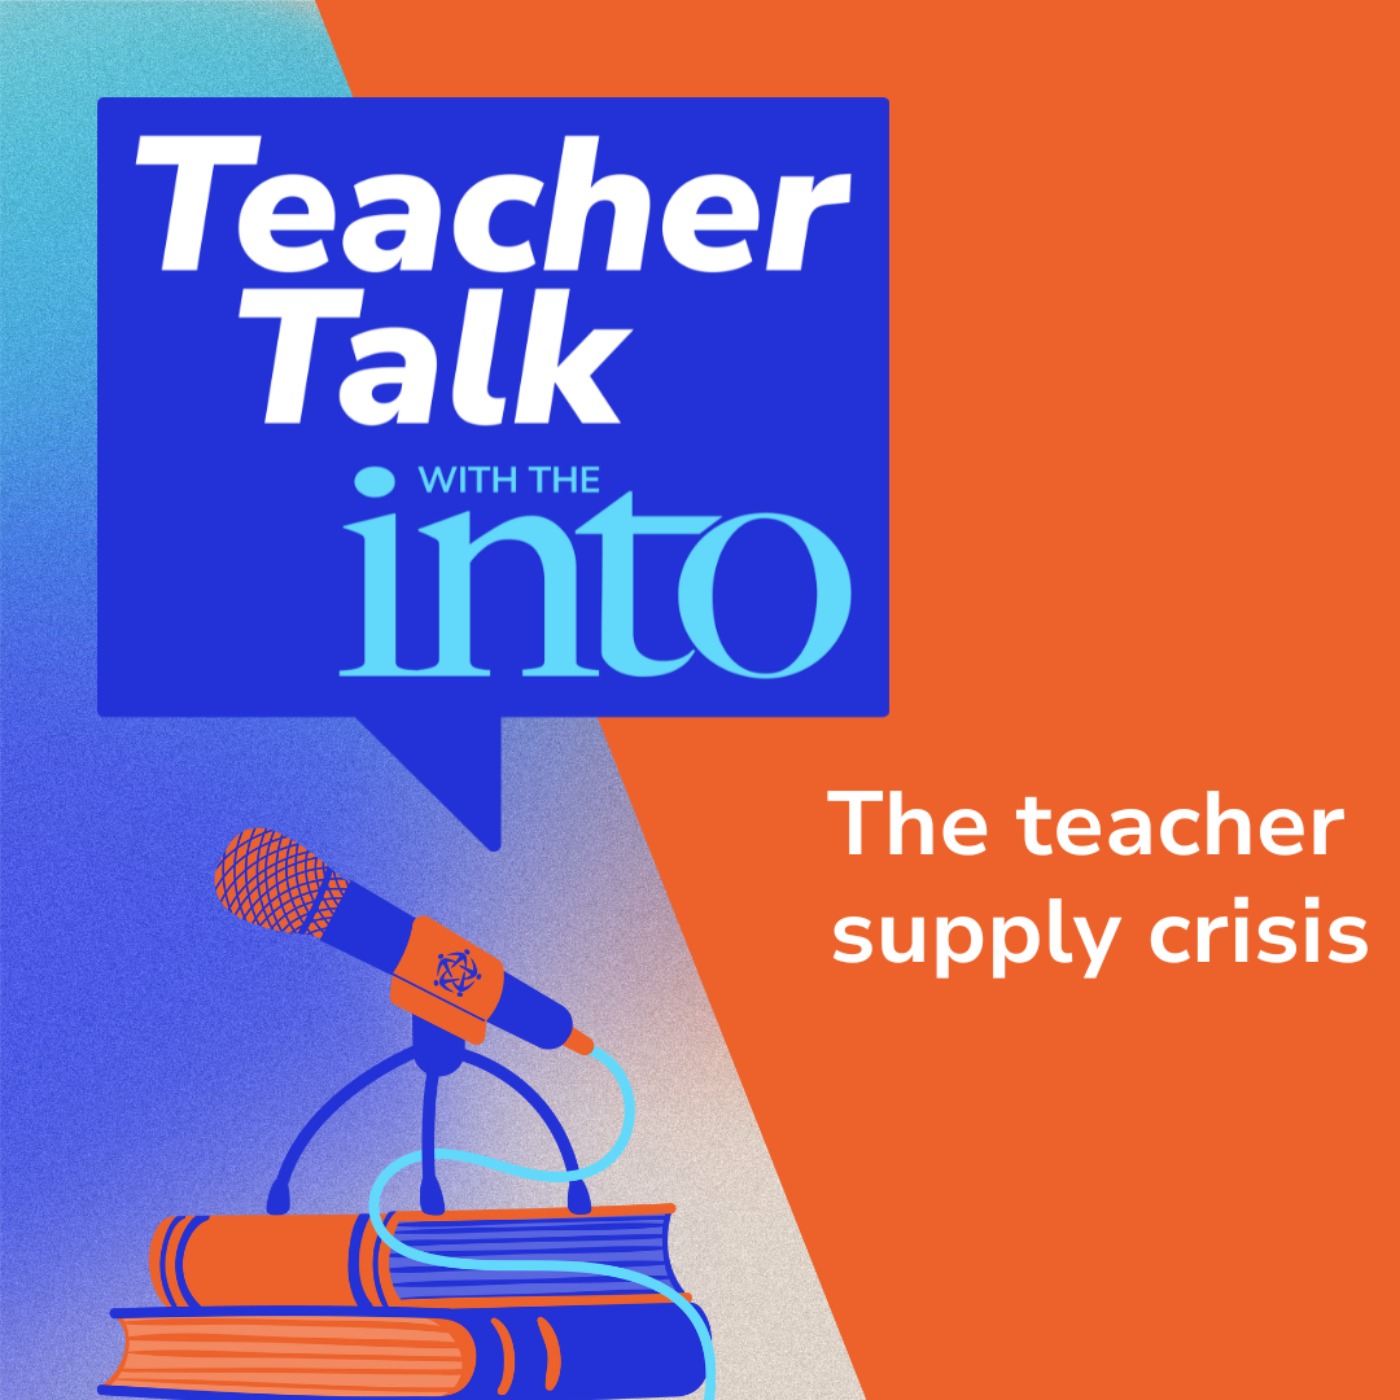 The teacher supply crisis